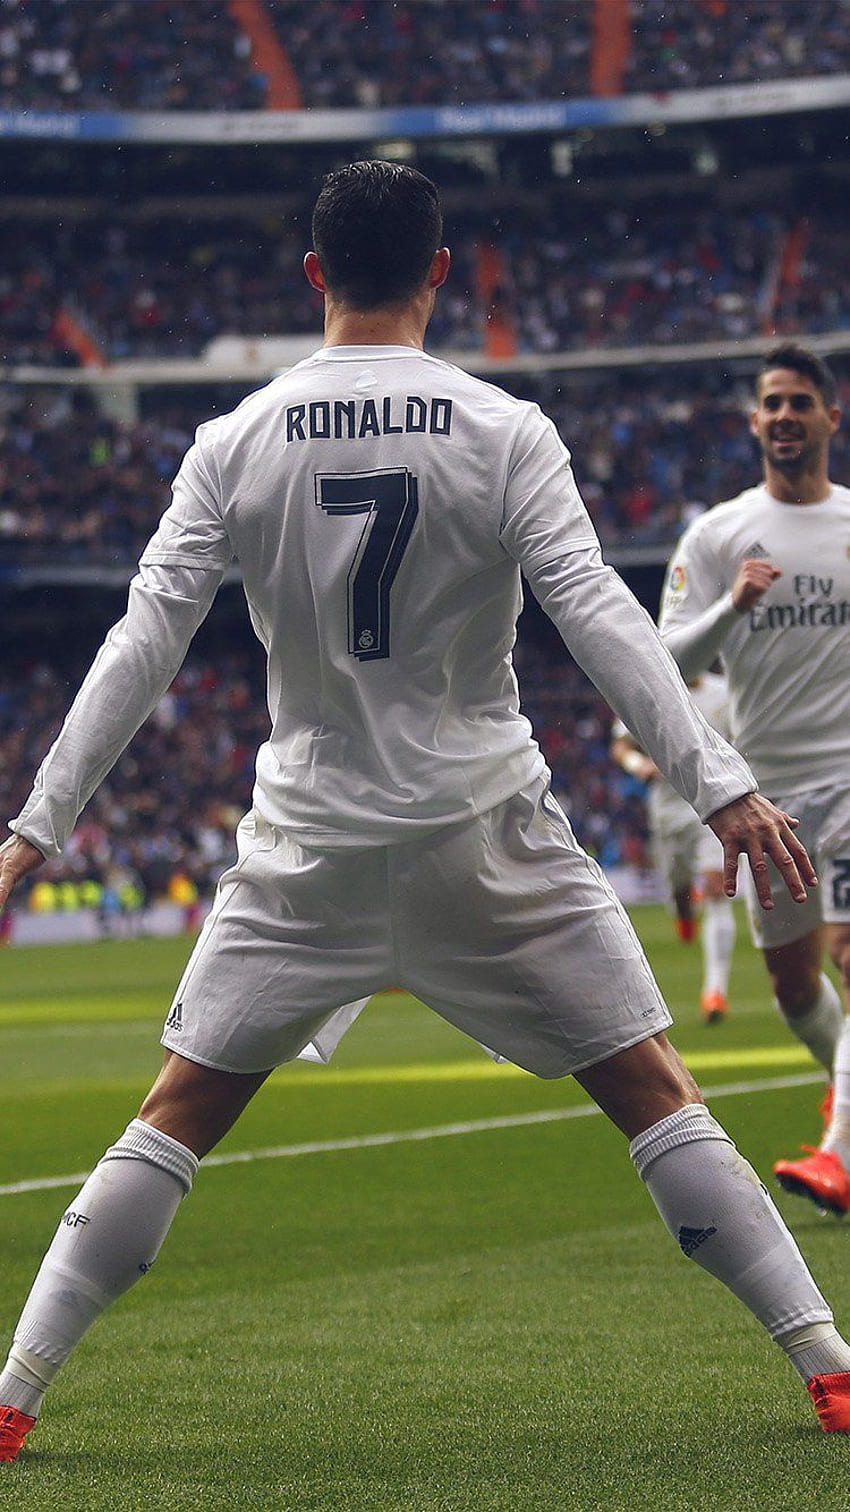 RONALDO NUMBER 7 REALMADRID SOCCOR IPHONE. Ronaldo, Cristiano ronaldo